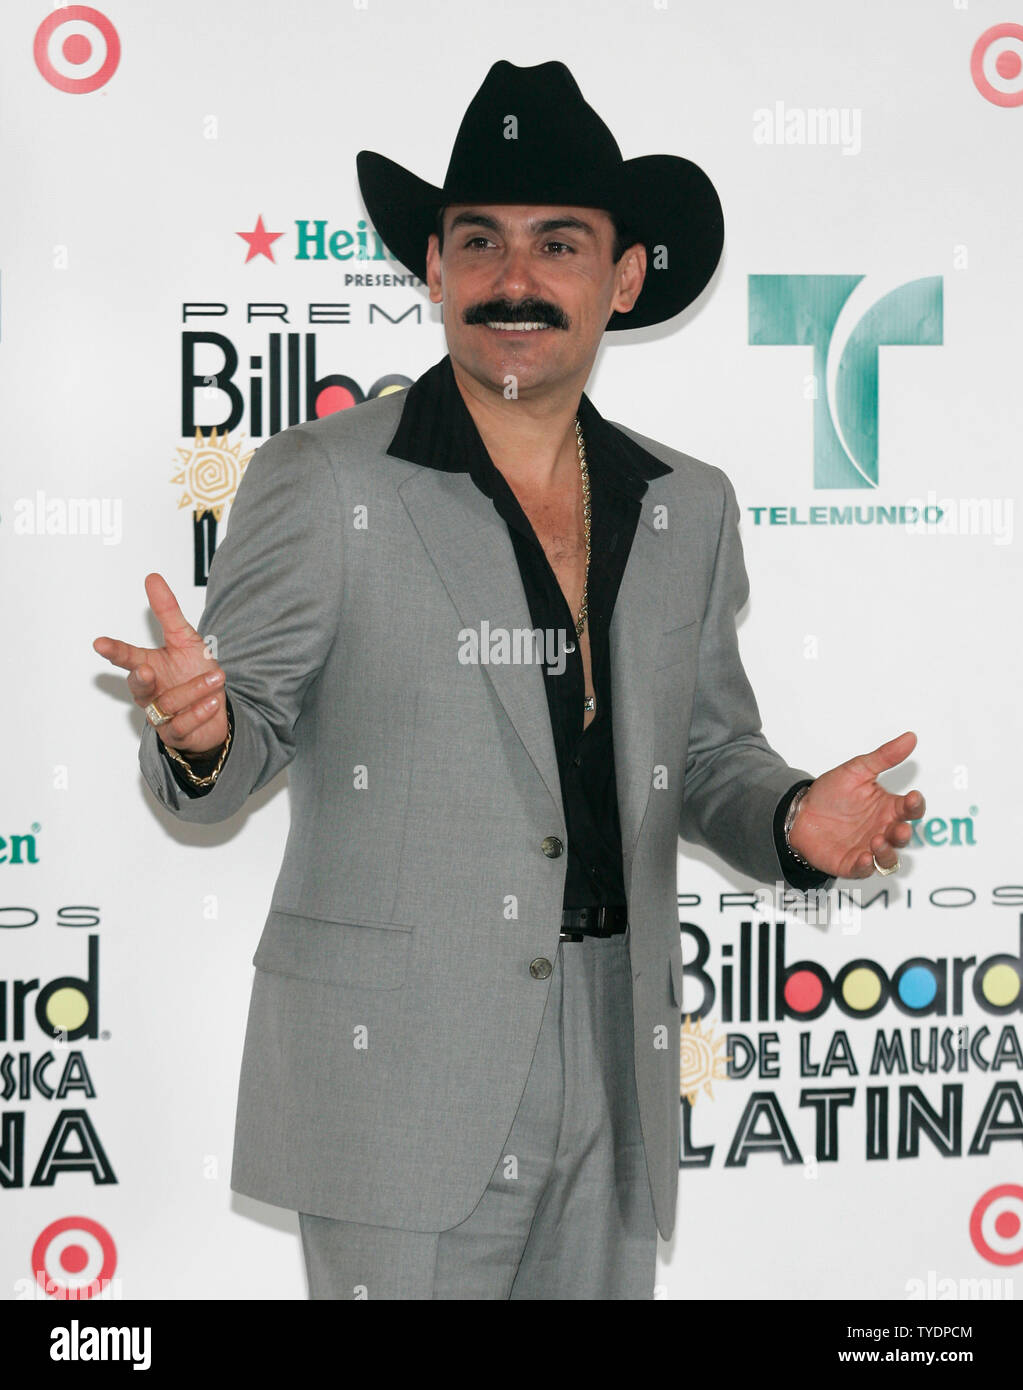 El Chapo de Sinaloa appears backstage at the 2007 Latin Billboard Awards at the BankUnited Center in Coral Gables, Florida on April 26, 2007. (UPI Photo/Michael Bush) Stock Photo